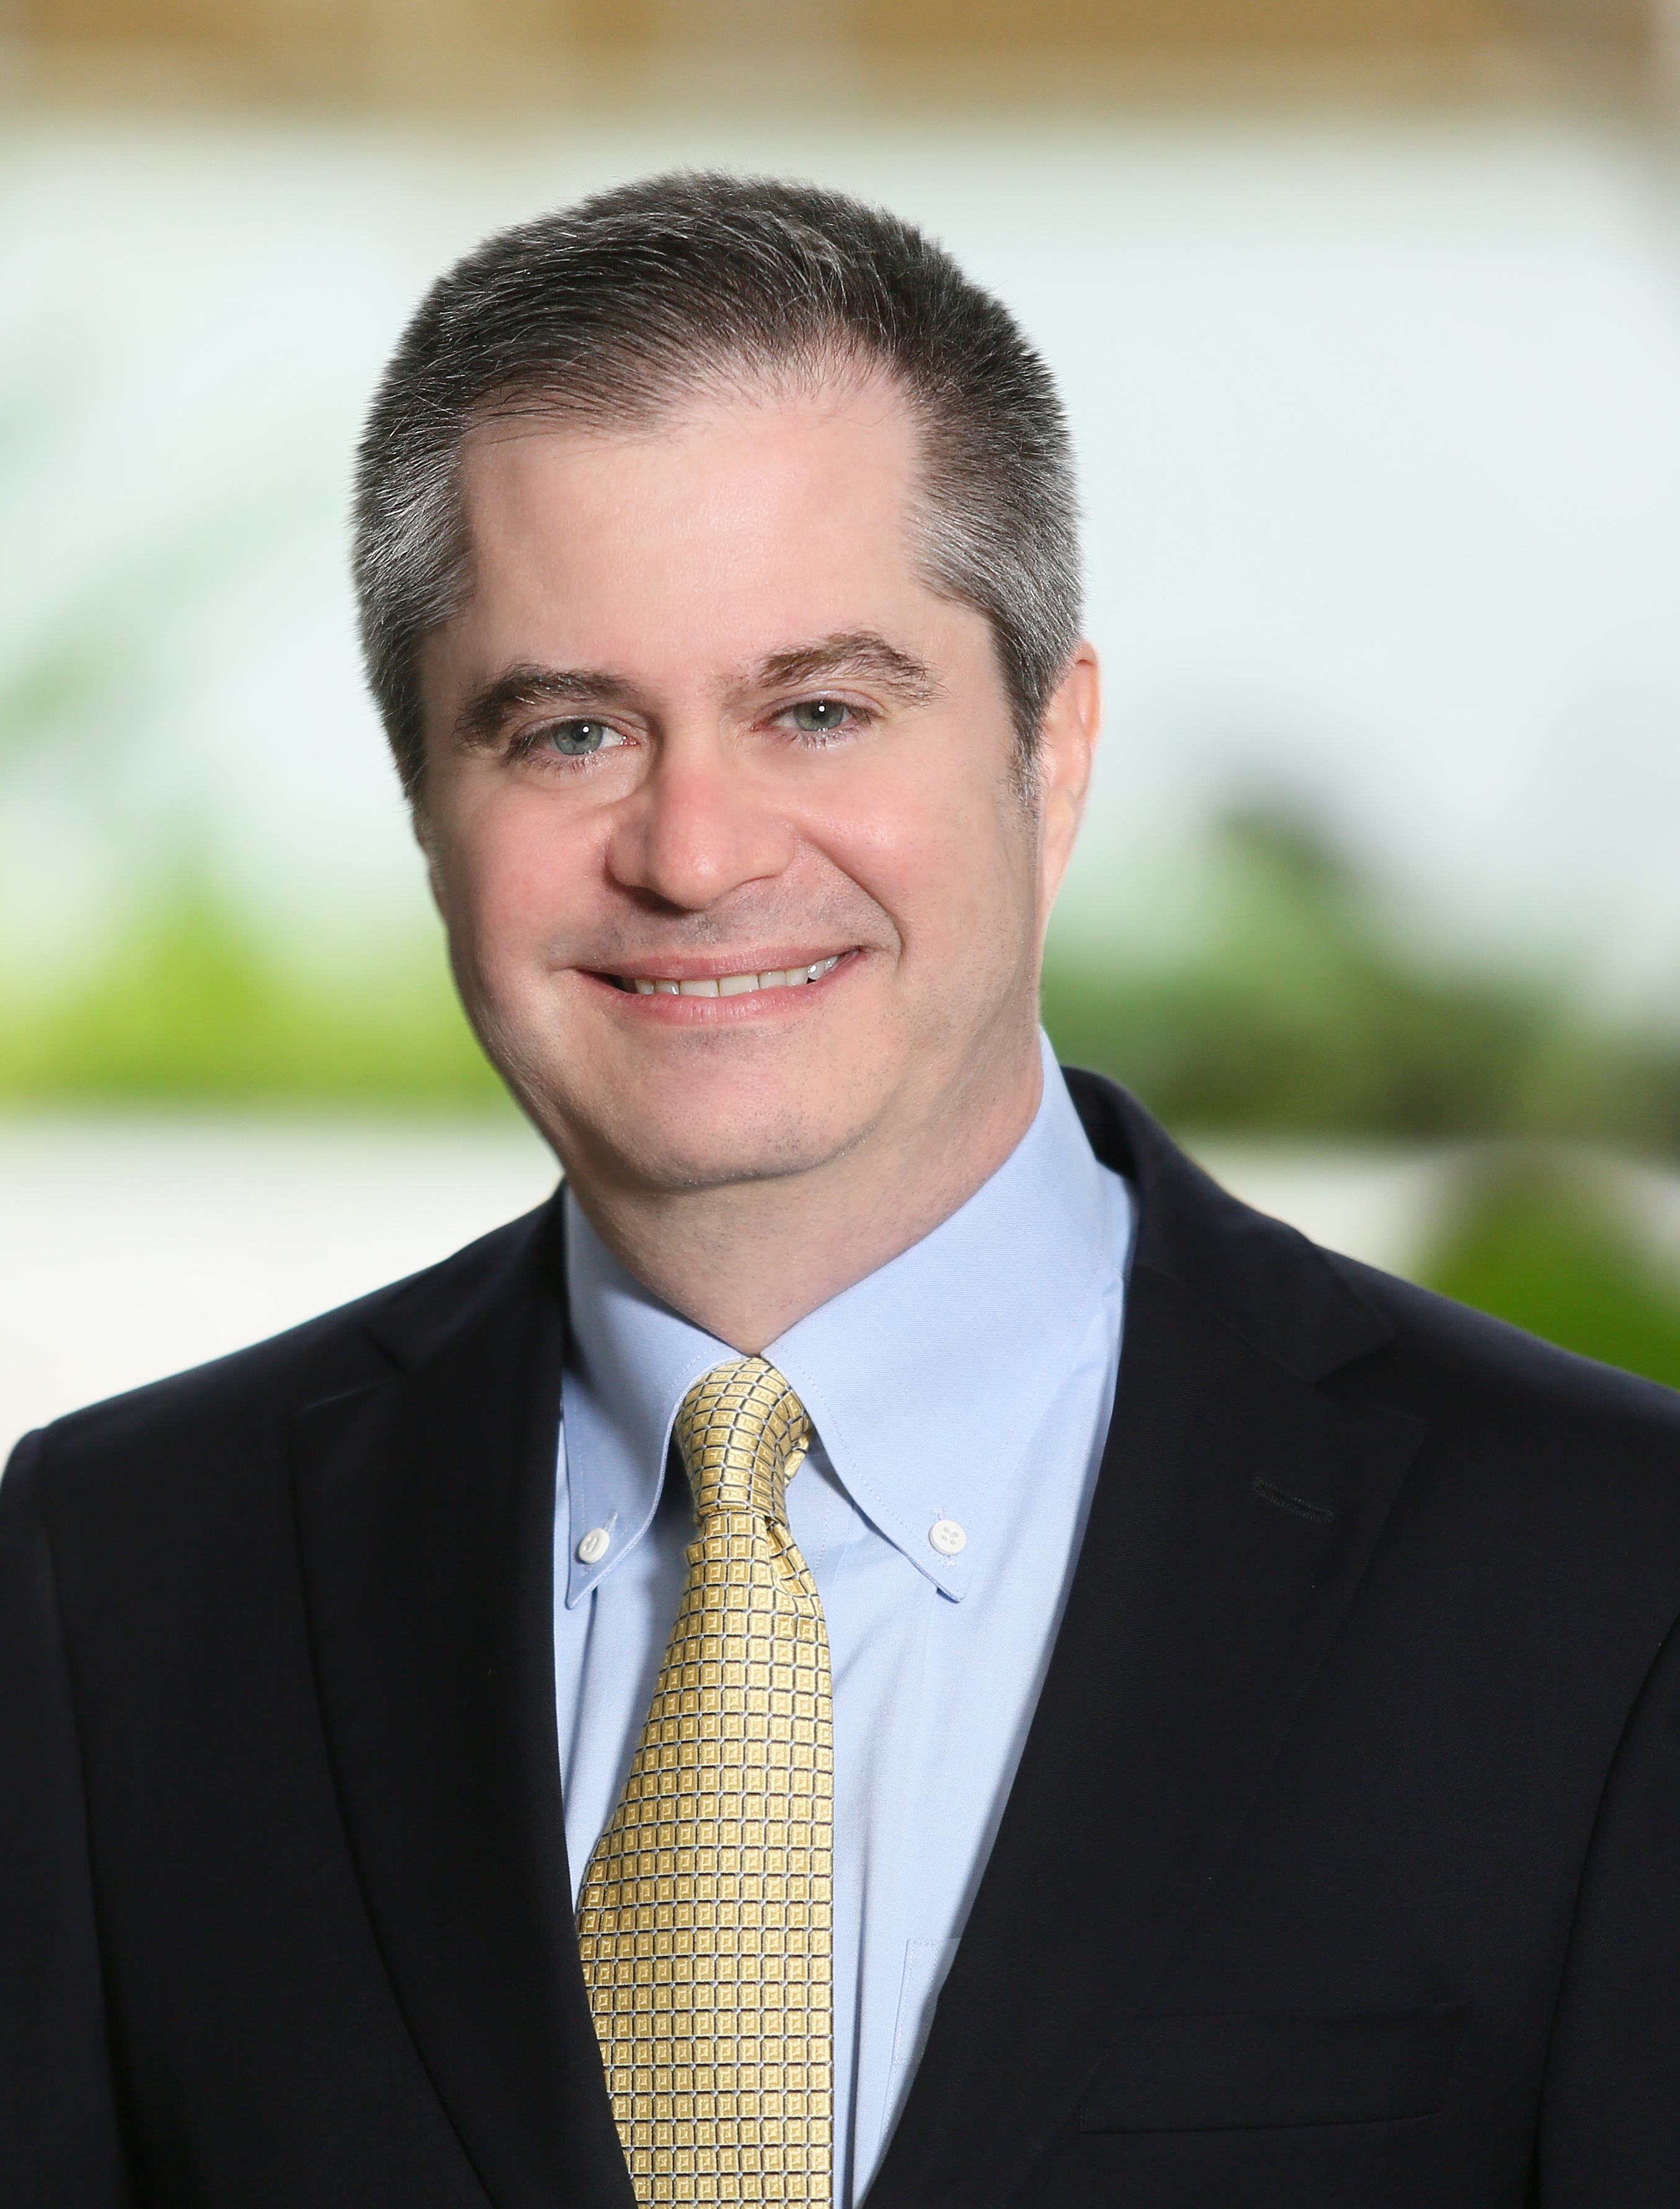  Mark S. Shapiro, Associate Professor of Professional Practice, Business Law